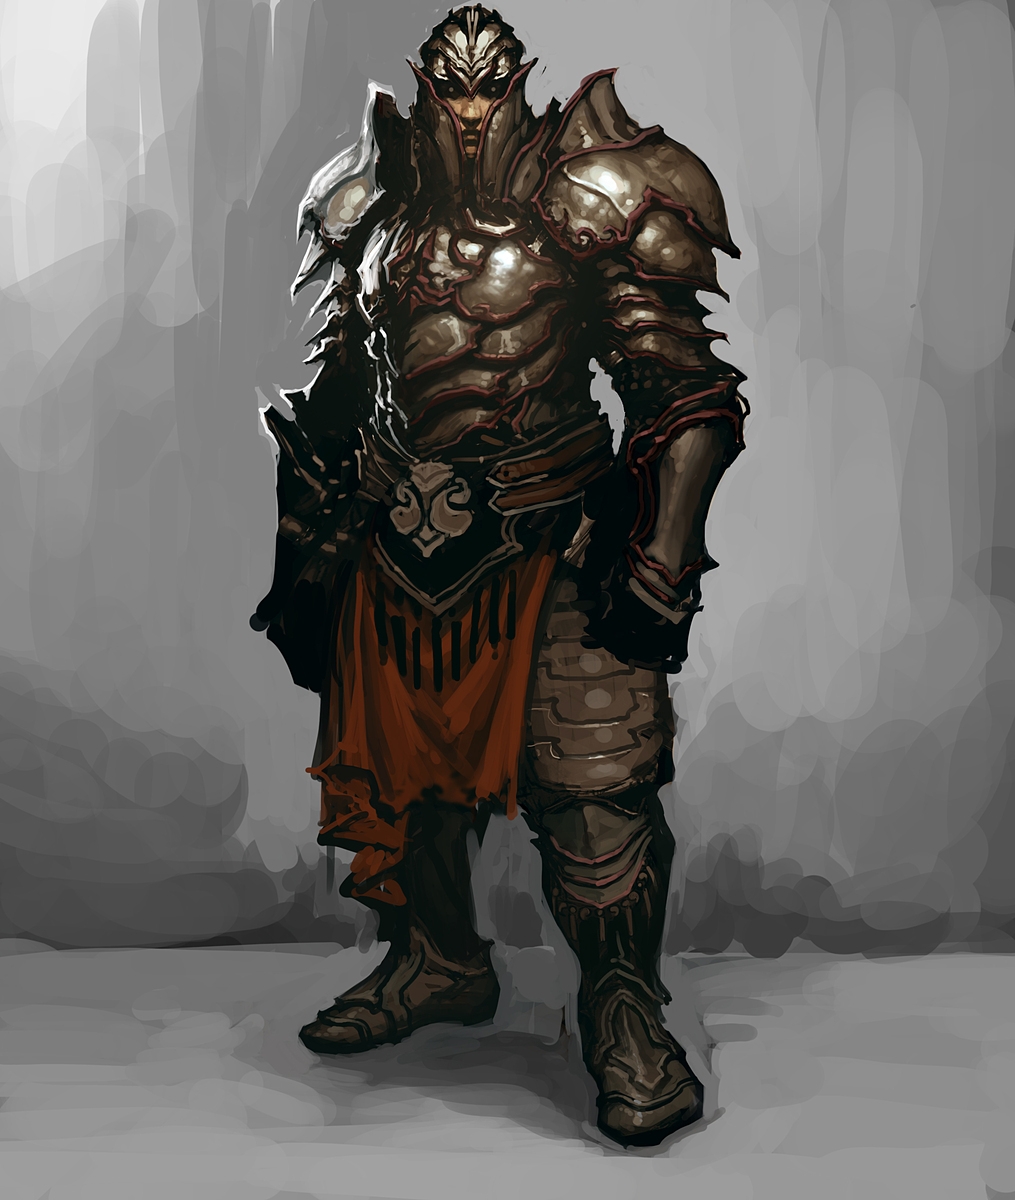 Diablo 3 - Храмовник Кормак (Templar Kormac)